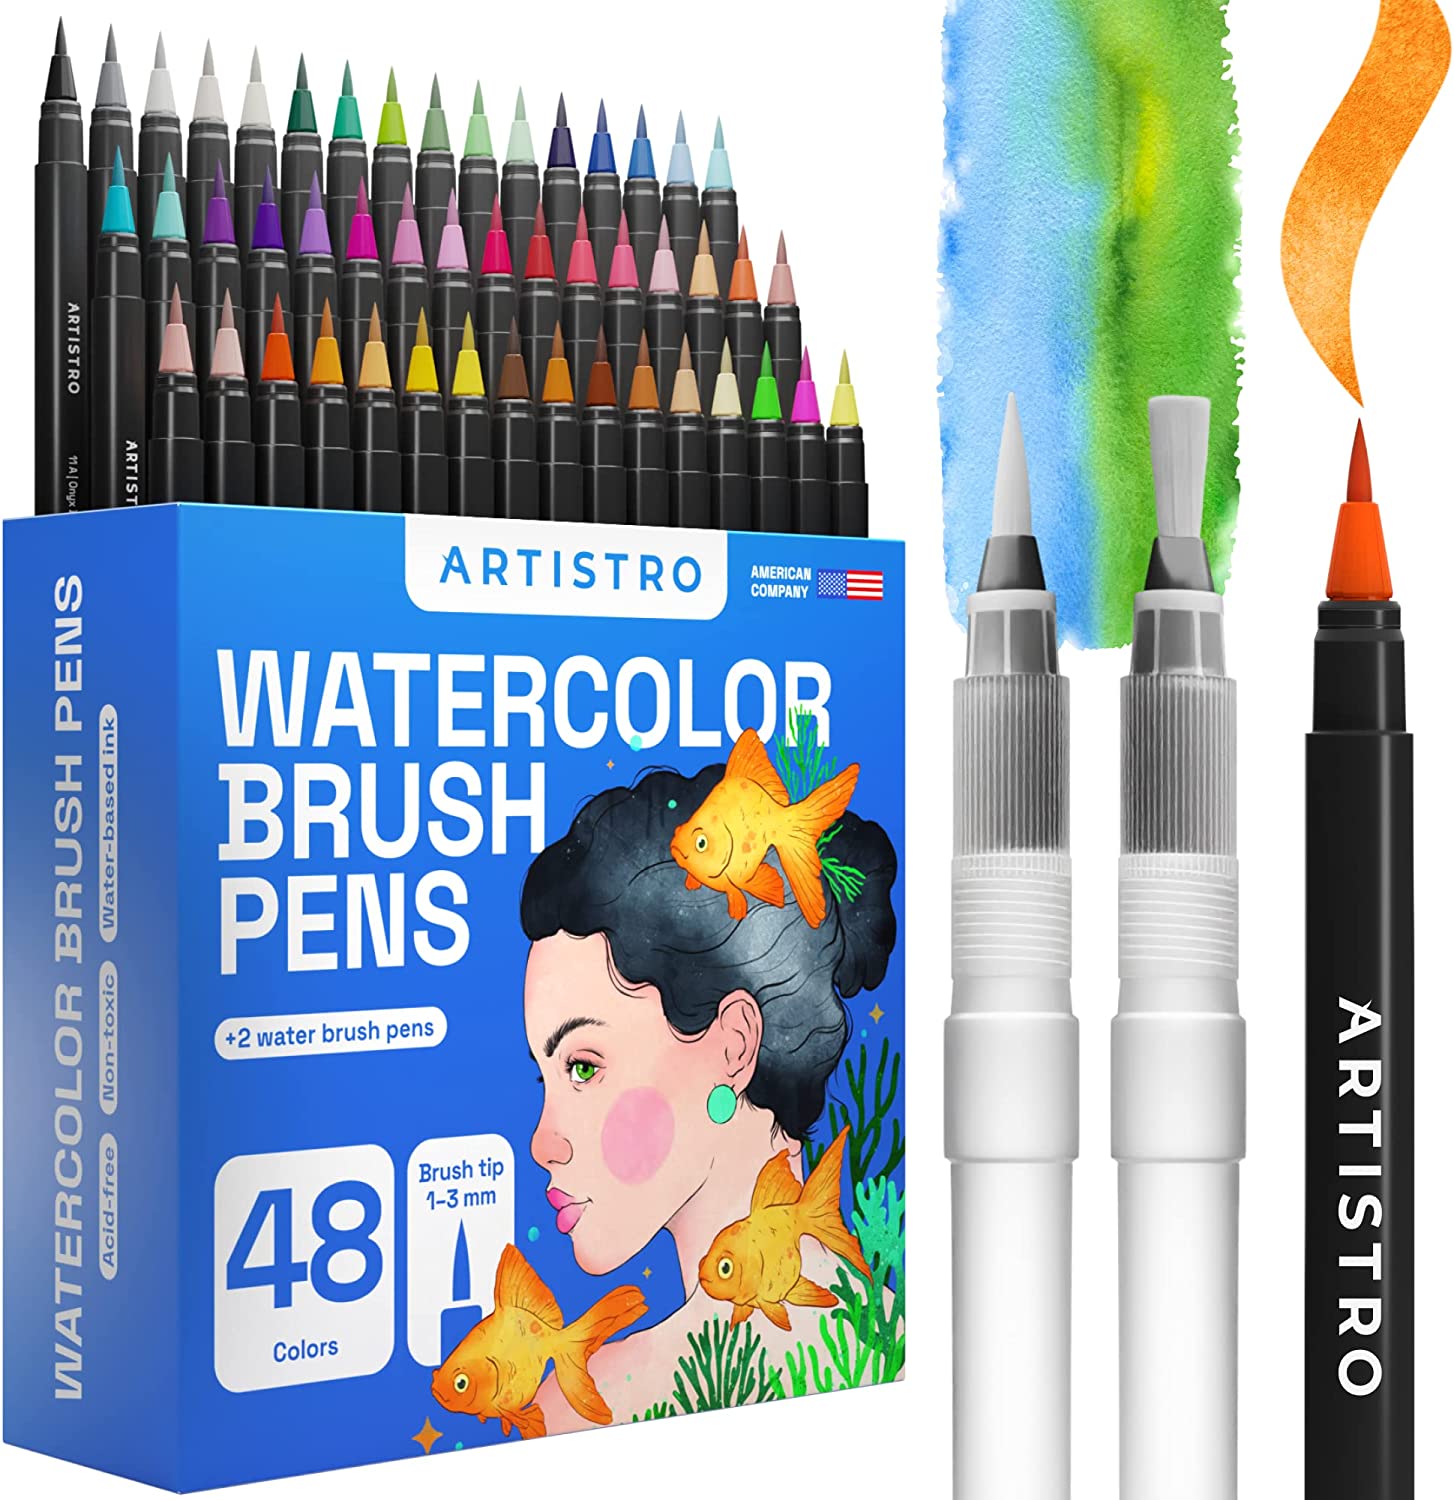 product 48 watercolor brush pens